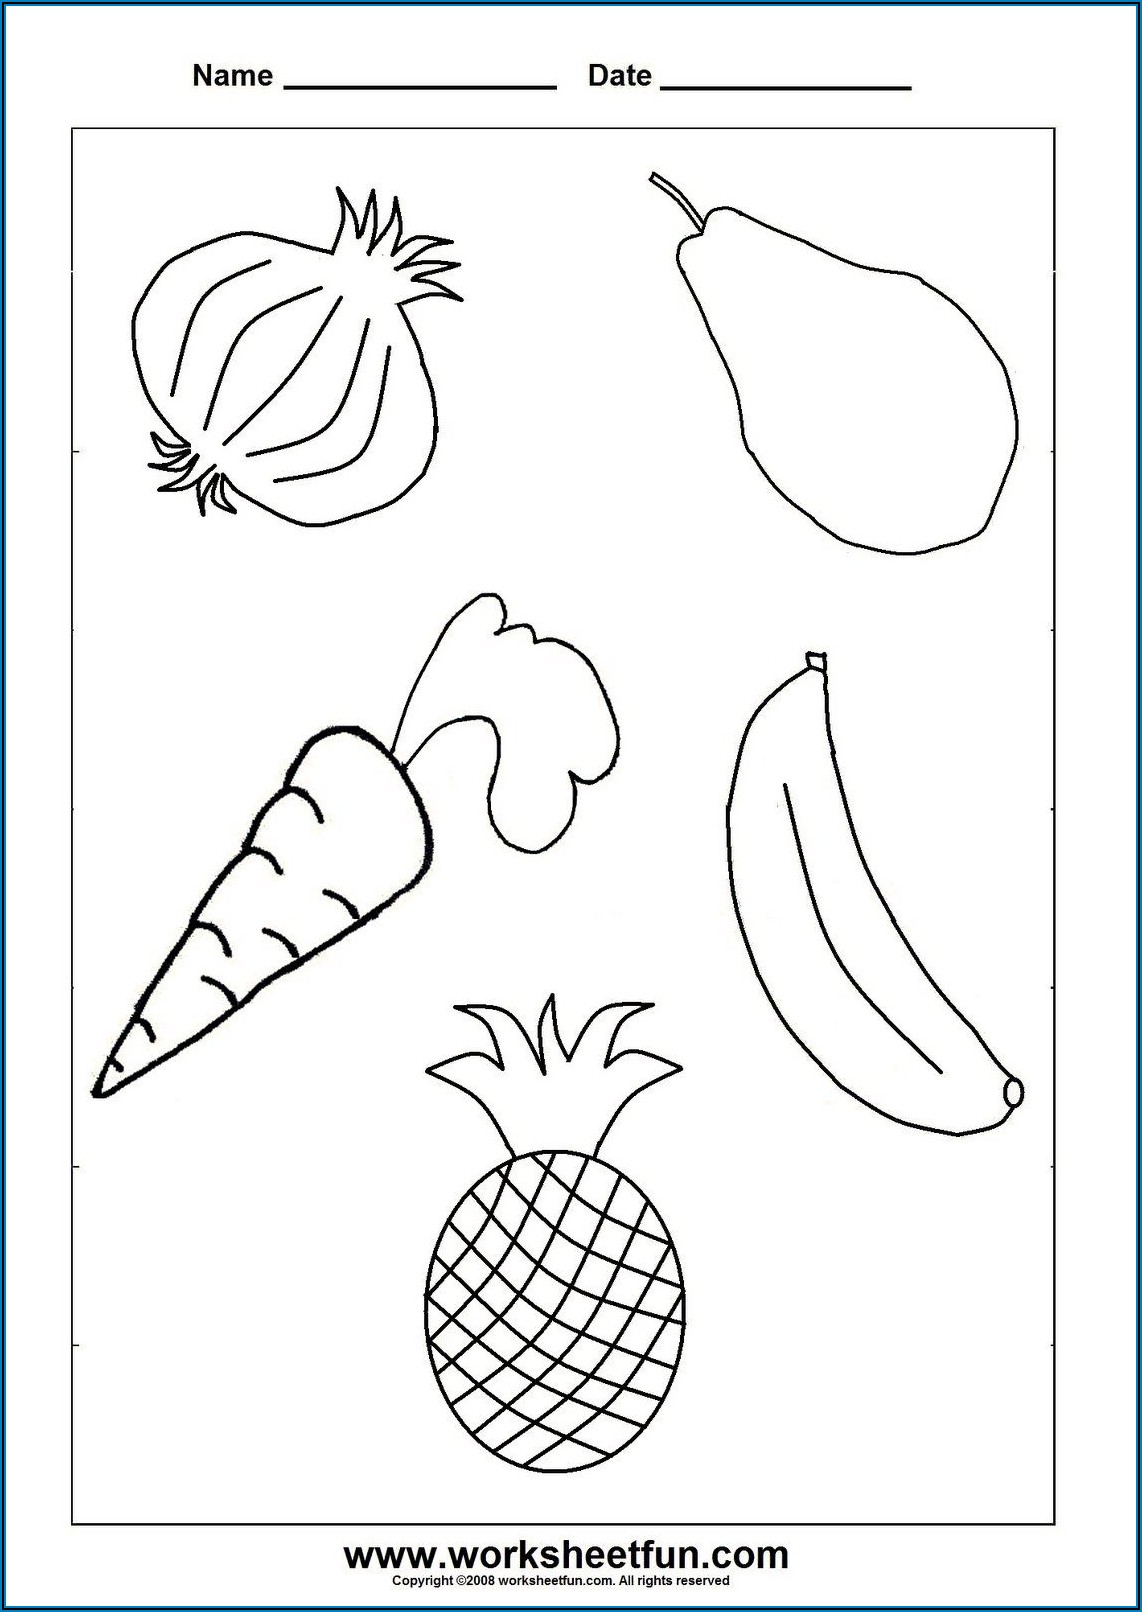 My Food Worksheet For Kindergarten